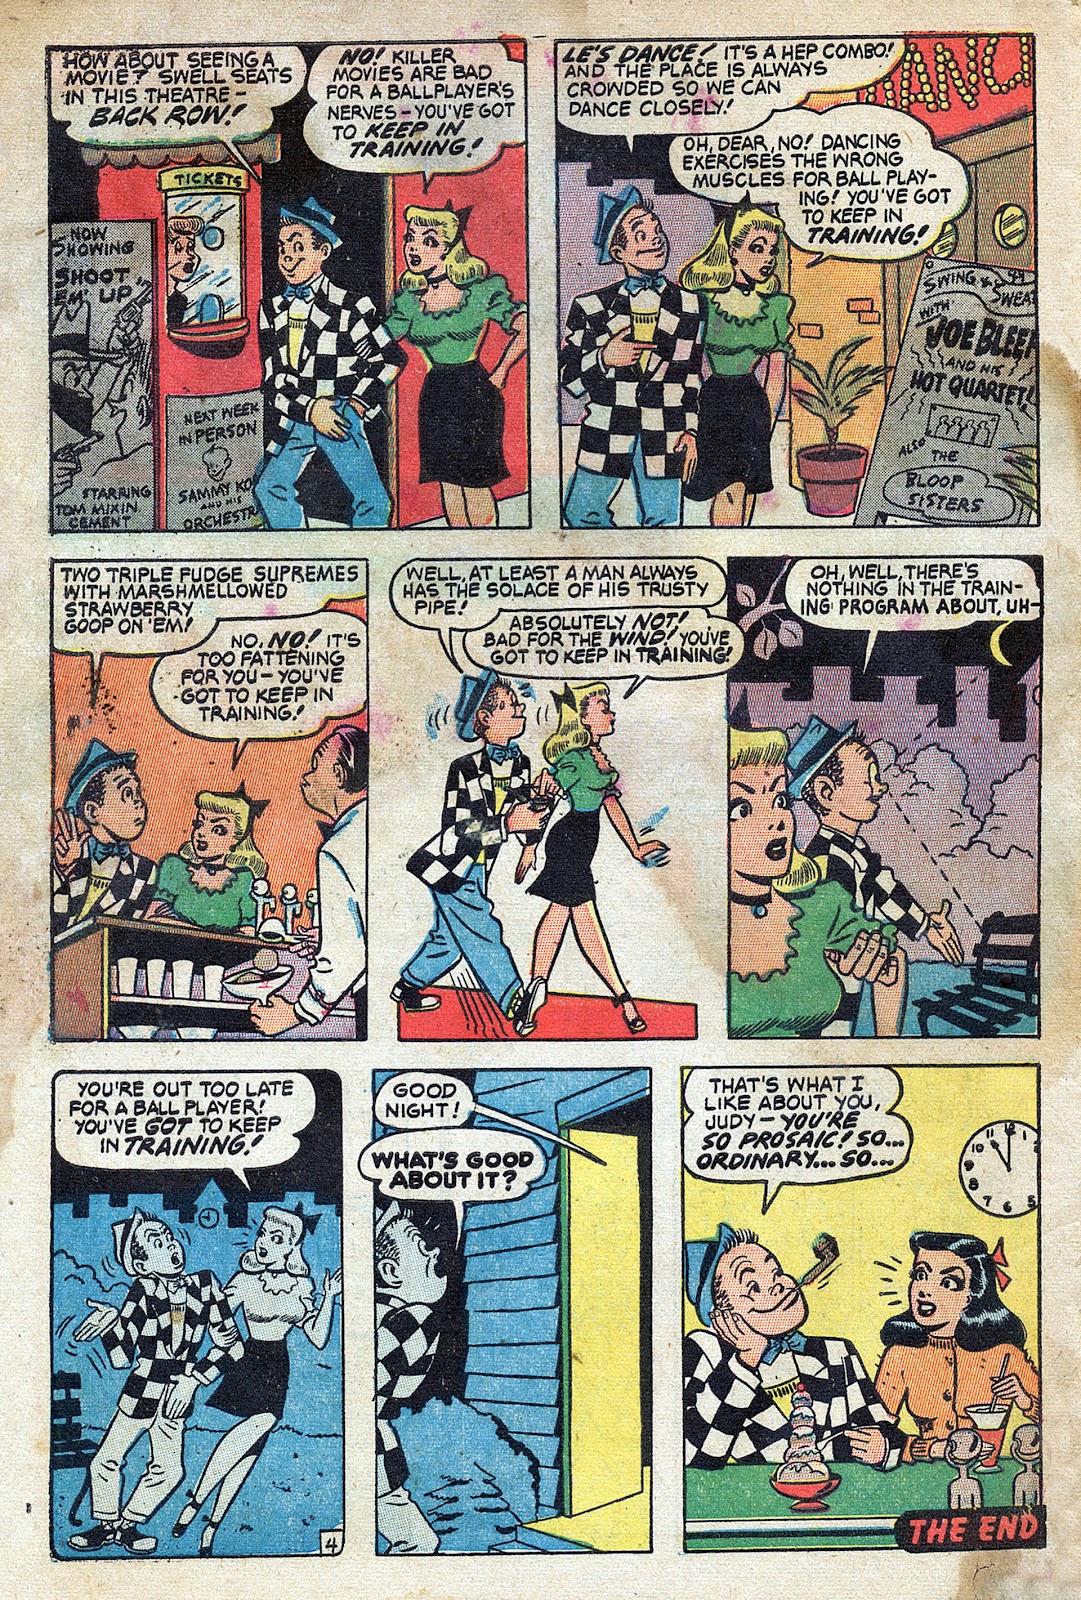 Georgie Comics (1945) issue 16 - Page 48